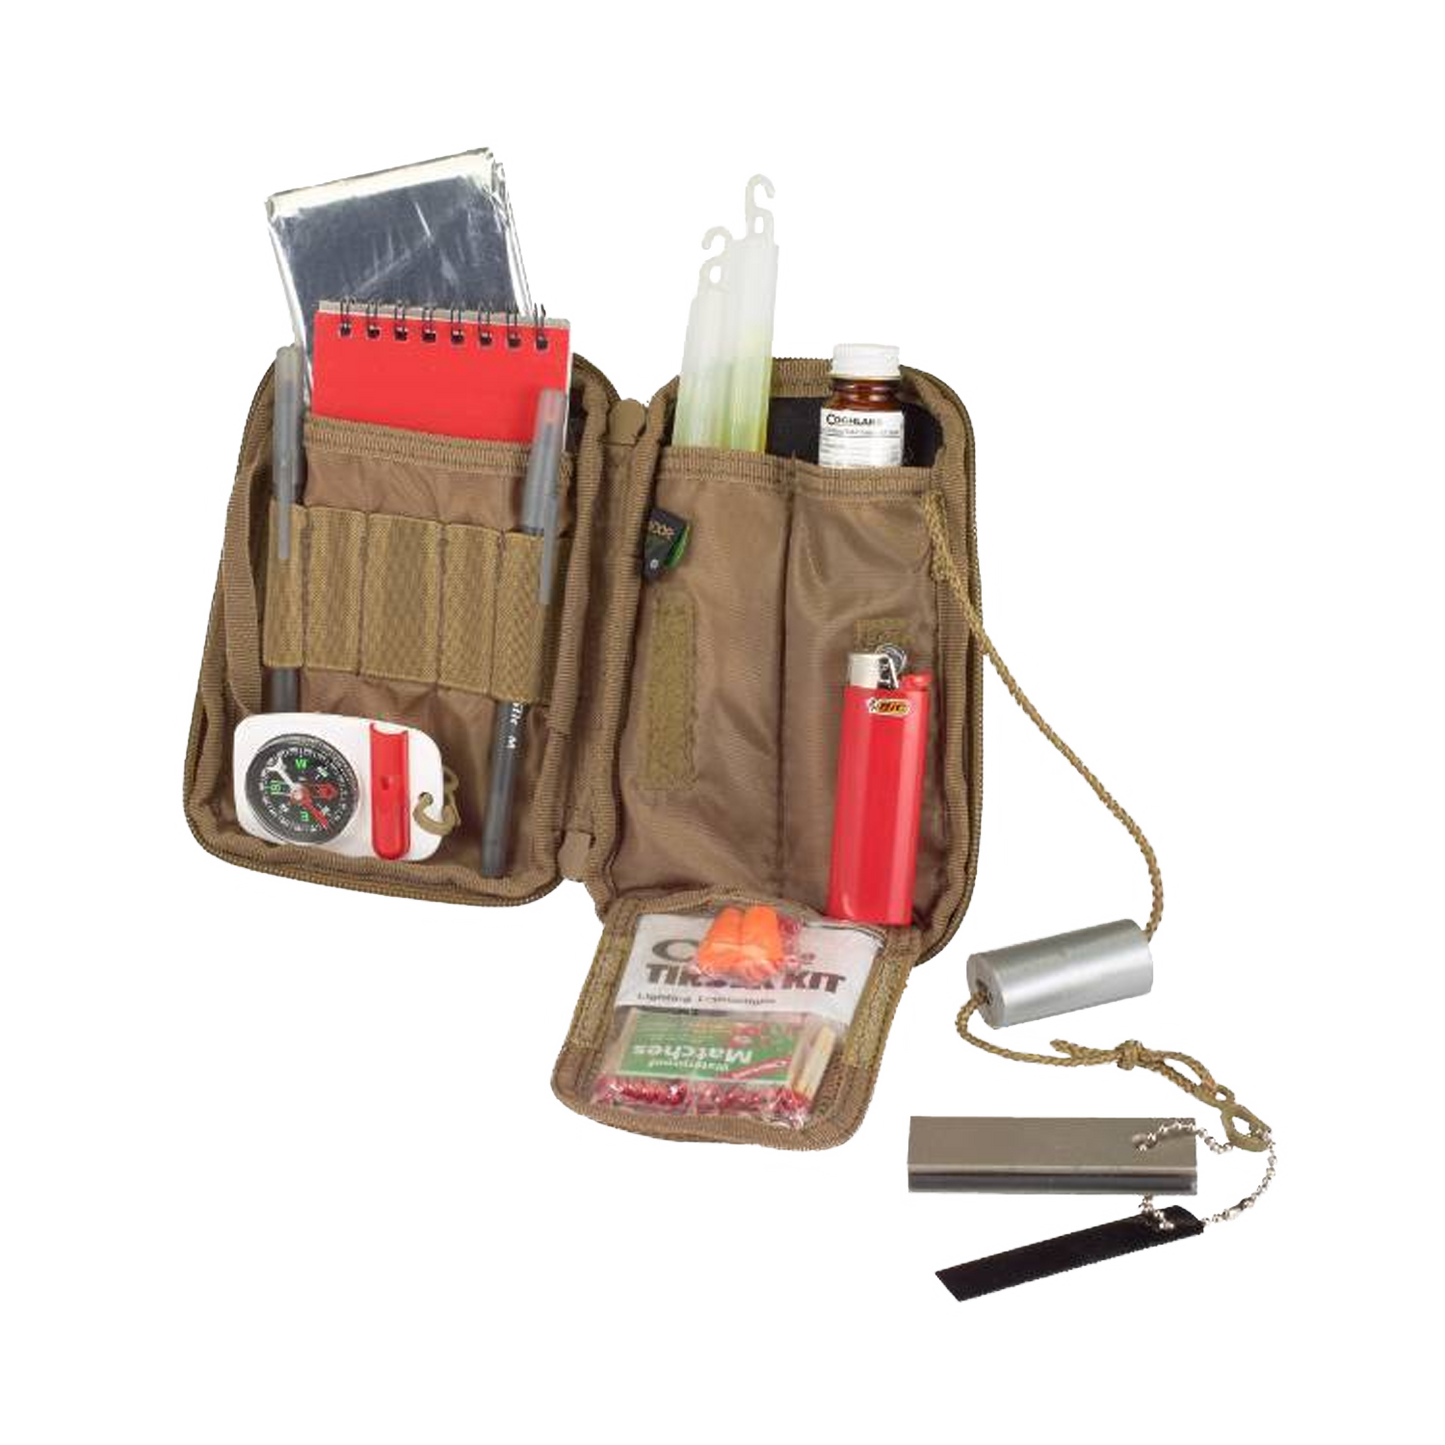 Zombie Survival Kit with Trauma Supplies